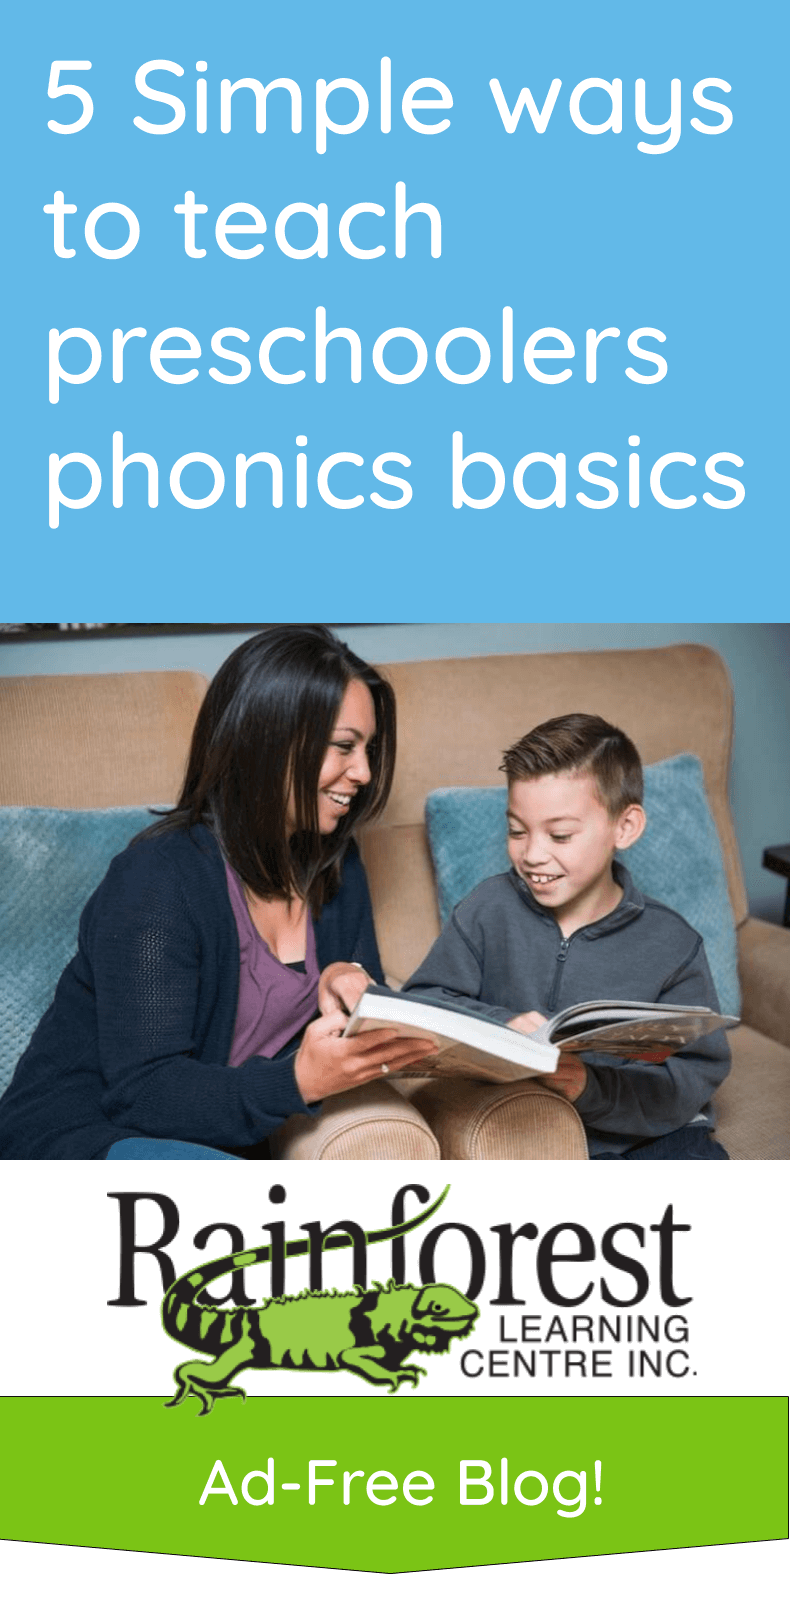 5 Simple ways to teach preschoolers phonics basics - article pinterest image